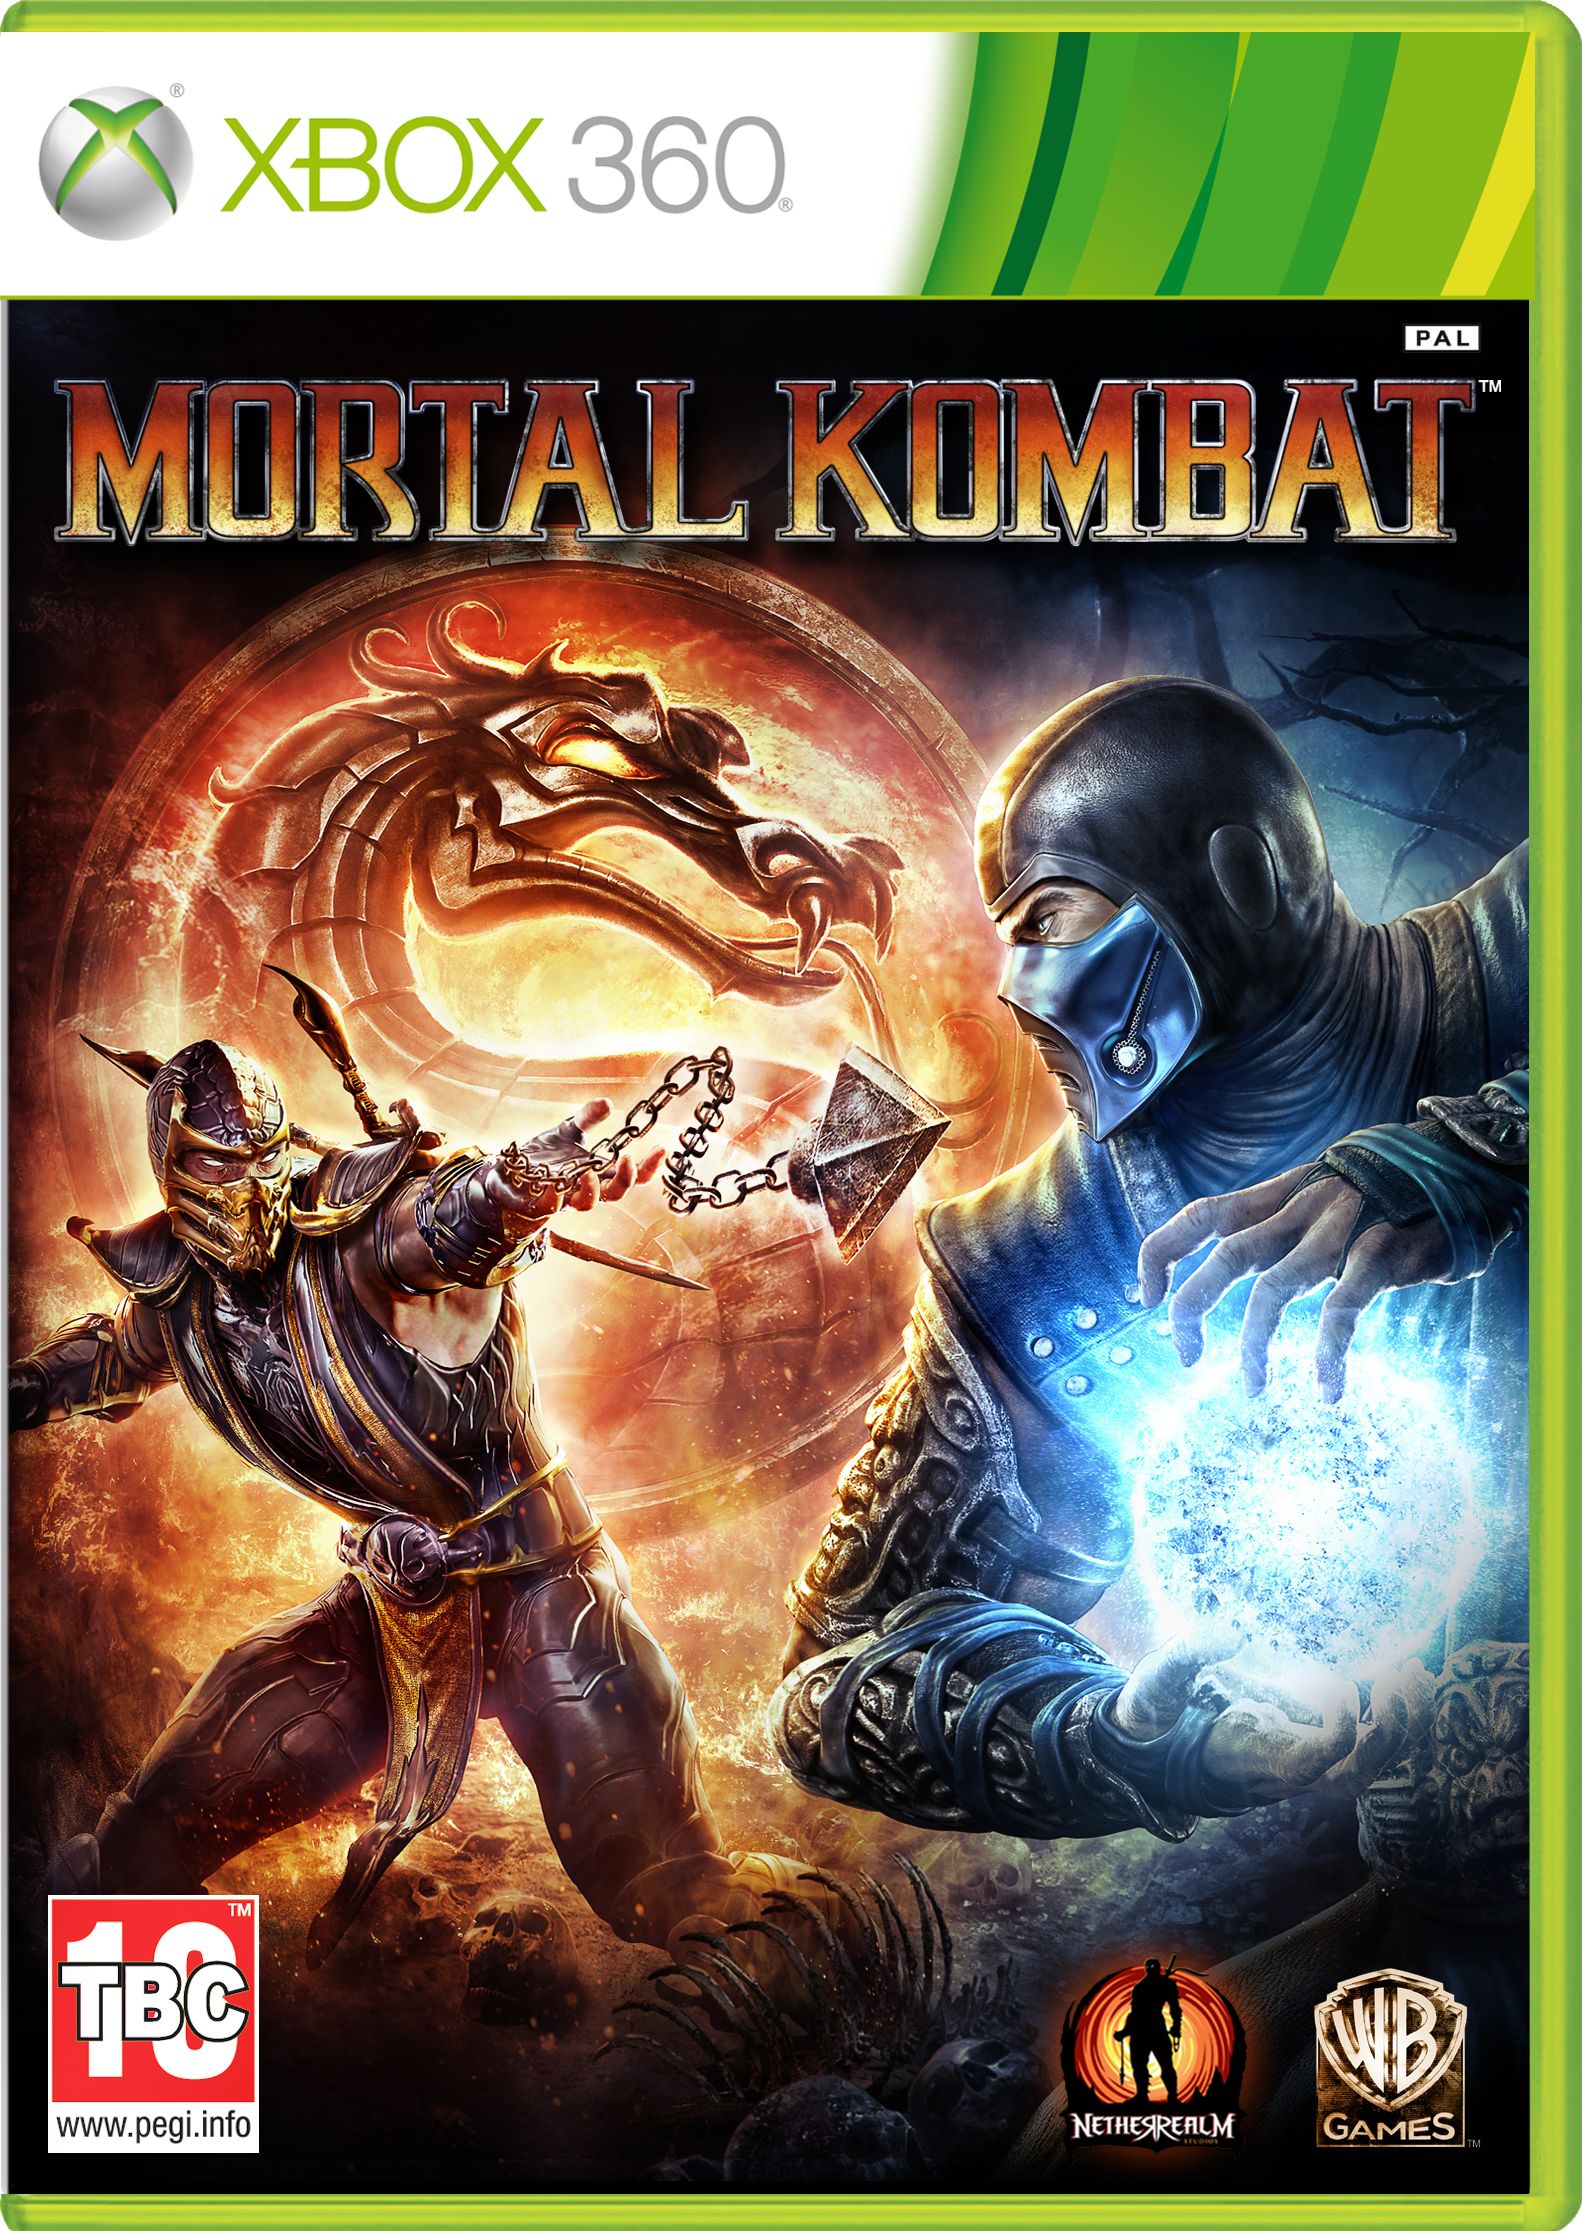 Mortal kombat (2011)